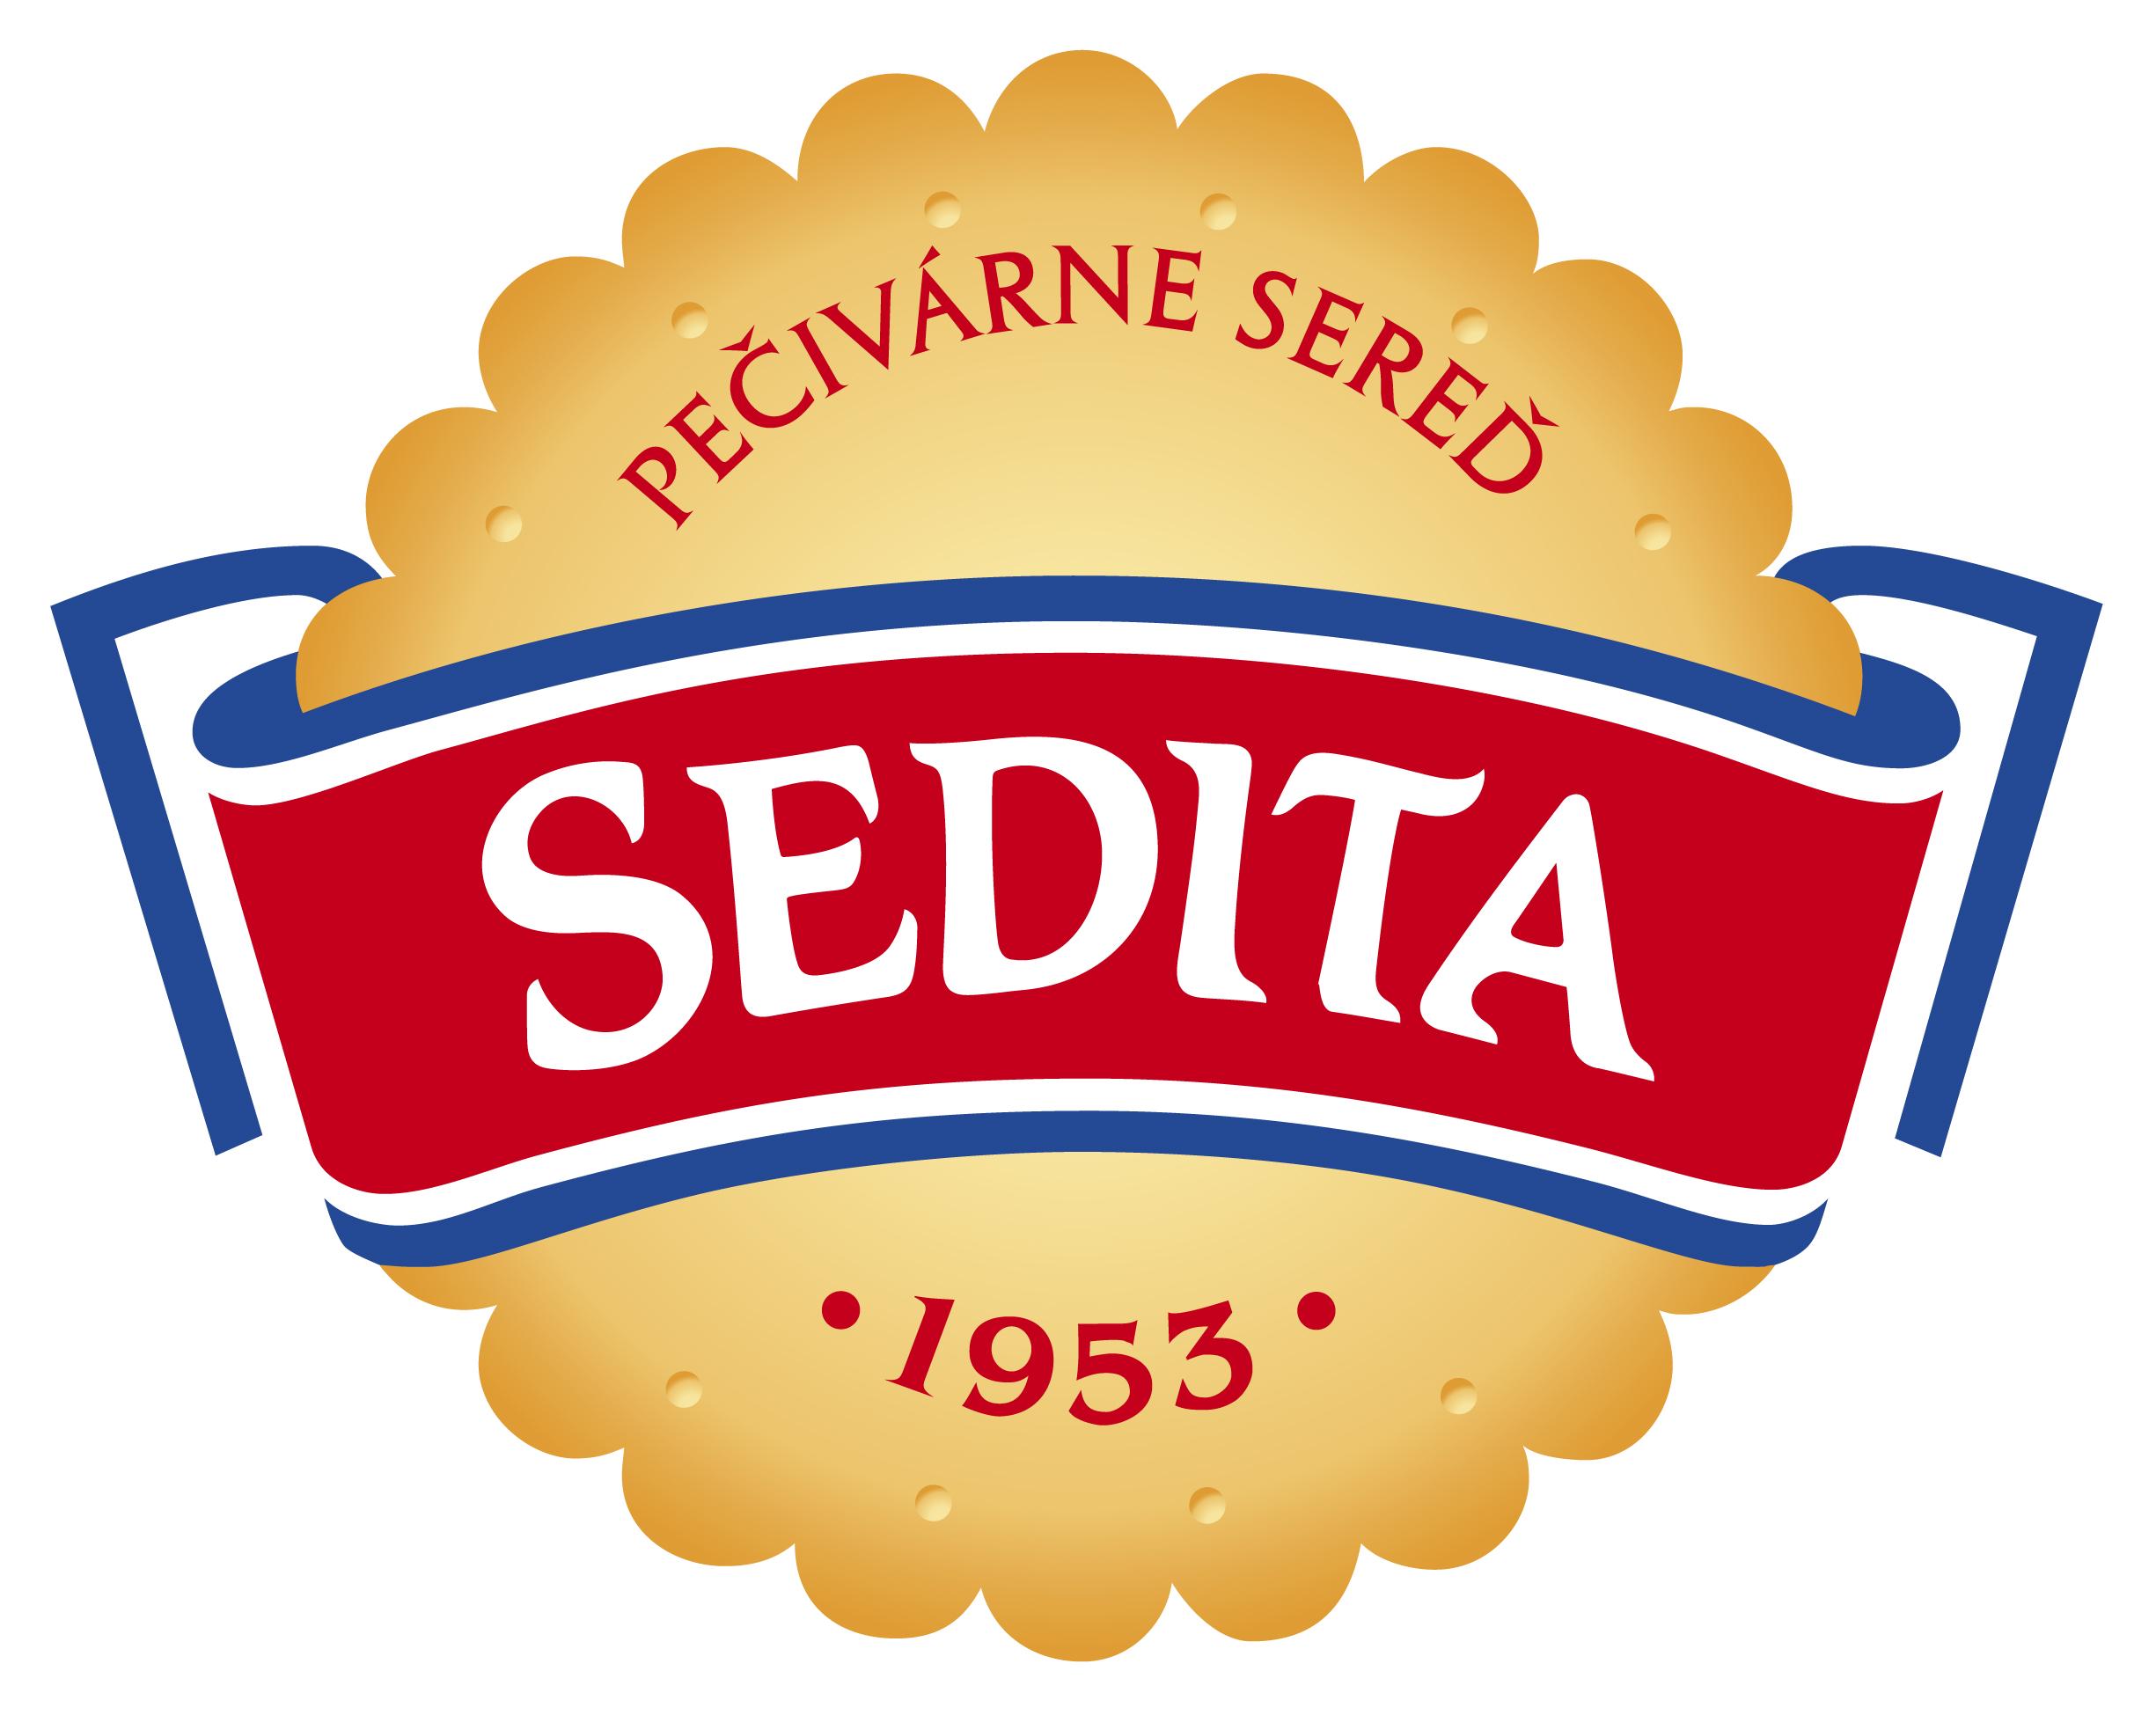 Senior Finančný Controller, Sedita Sereď